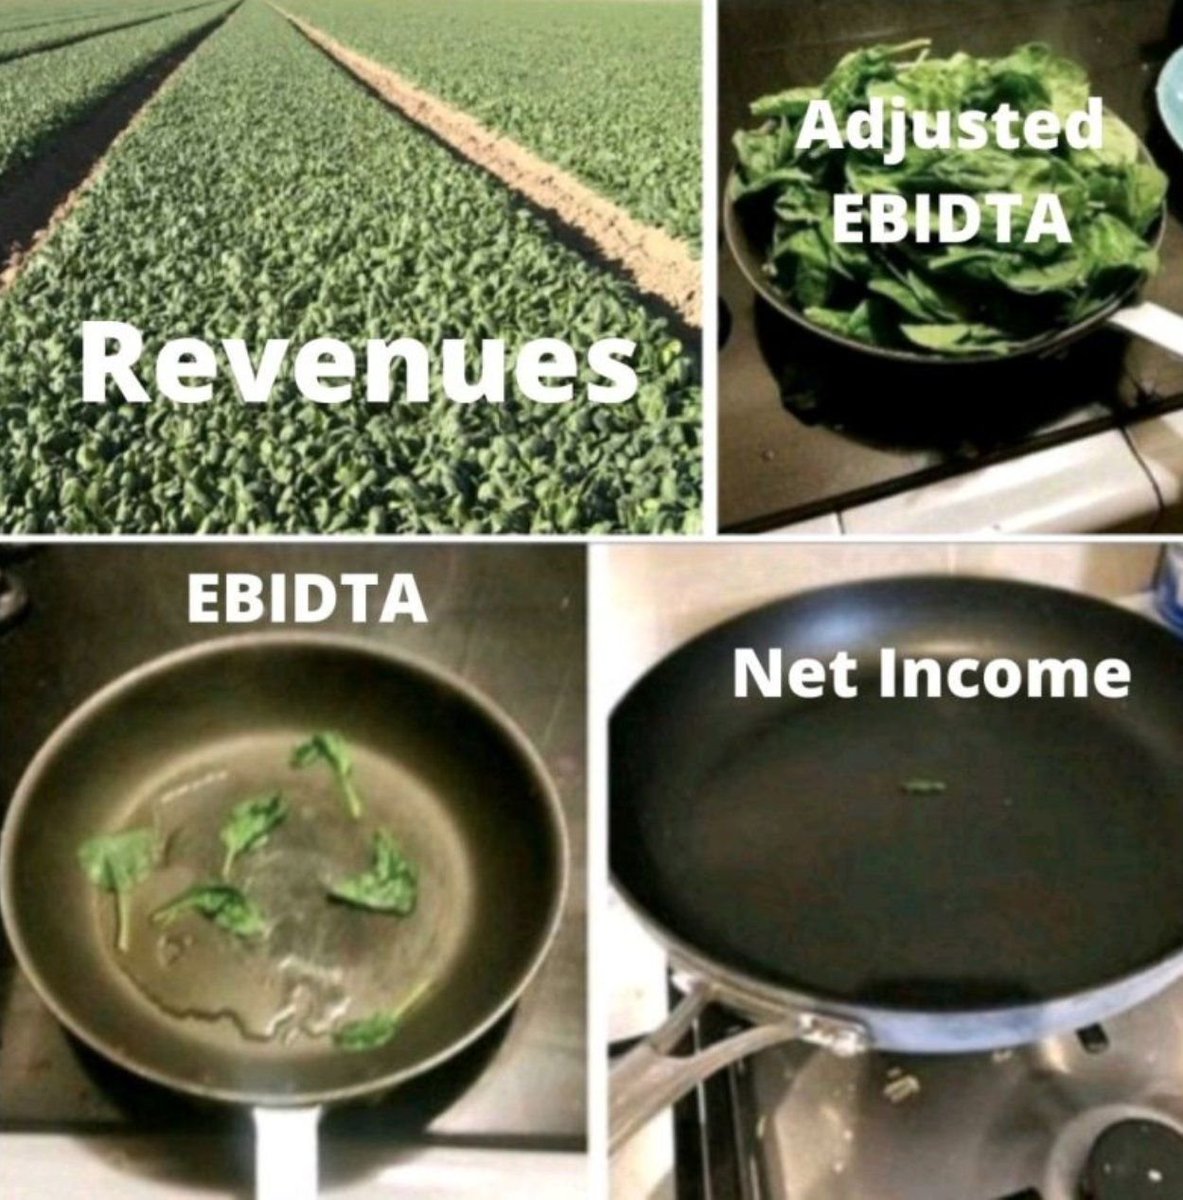 Revenue versus Net Income: